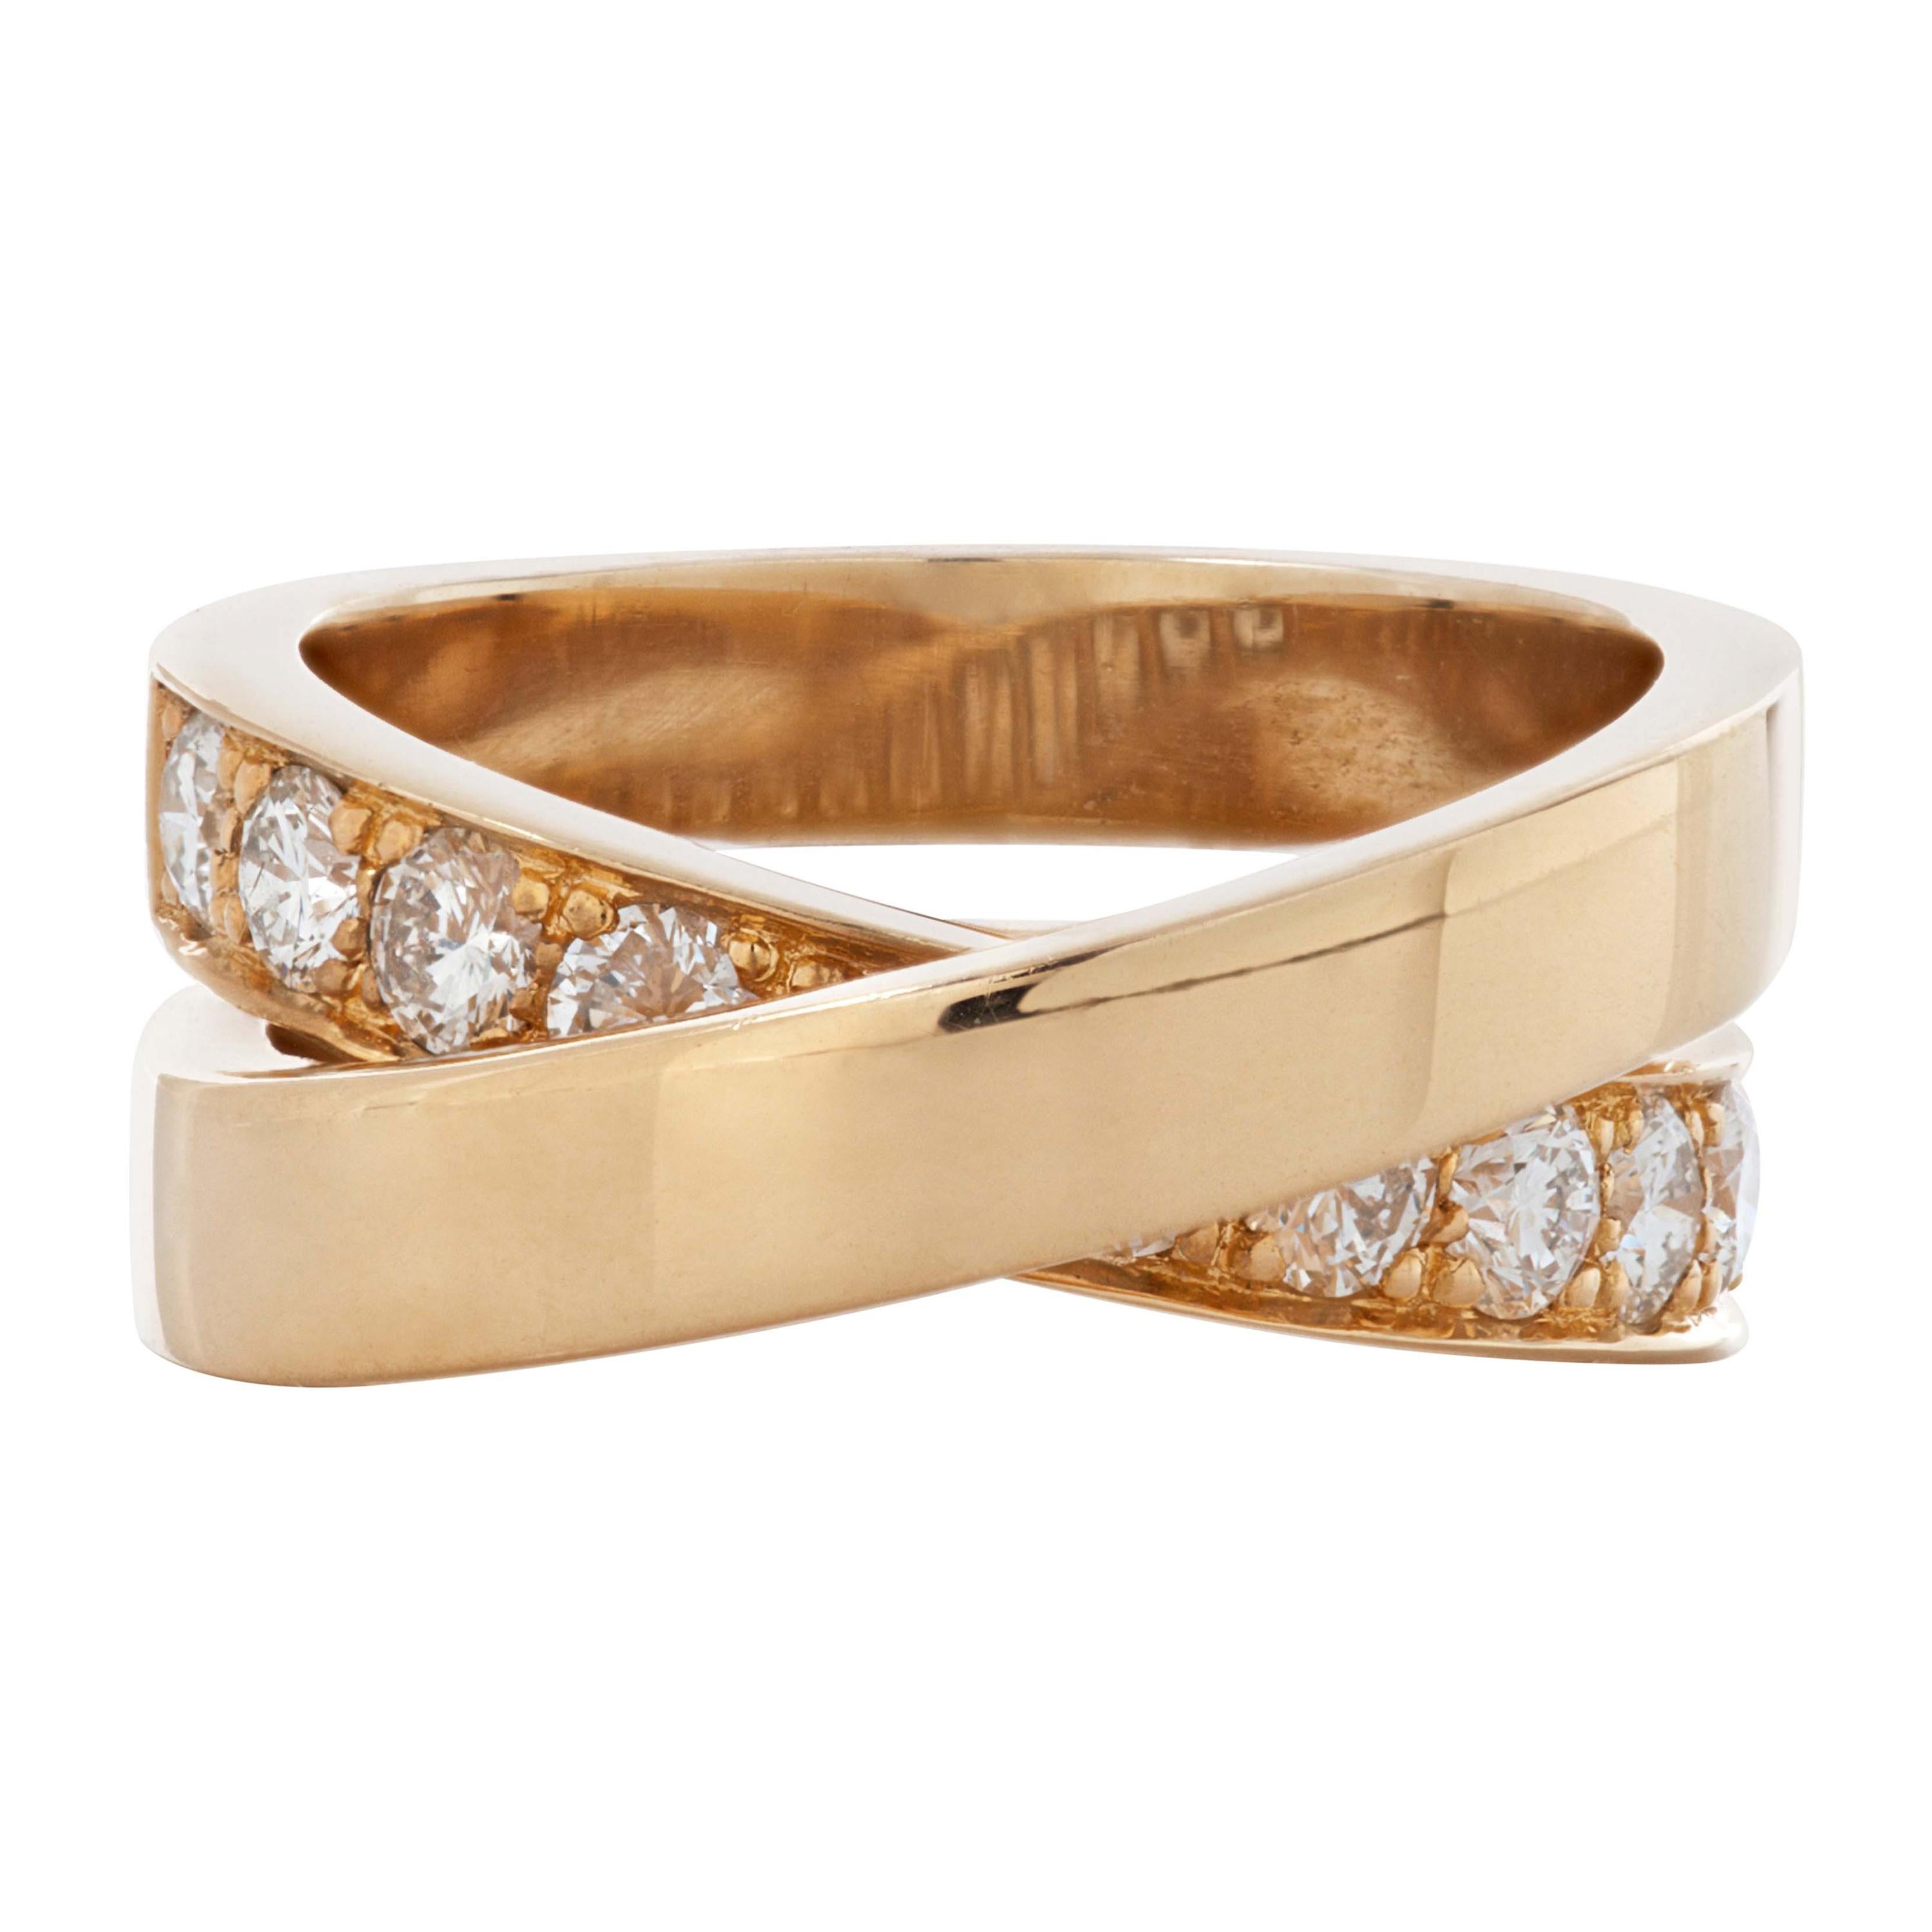 Cartier Paris Nouvelle Vague Diamond Crossover Ring in 18k Yellow Gold